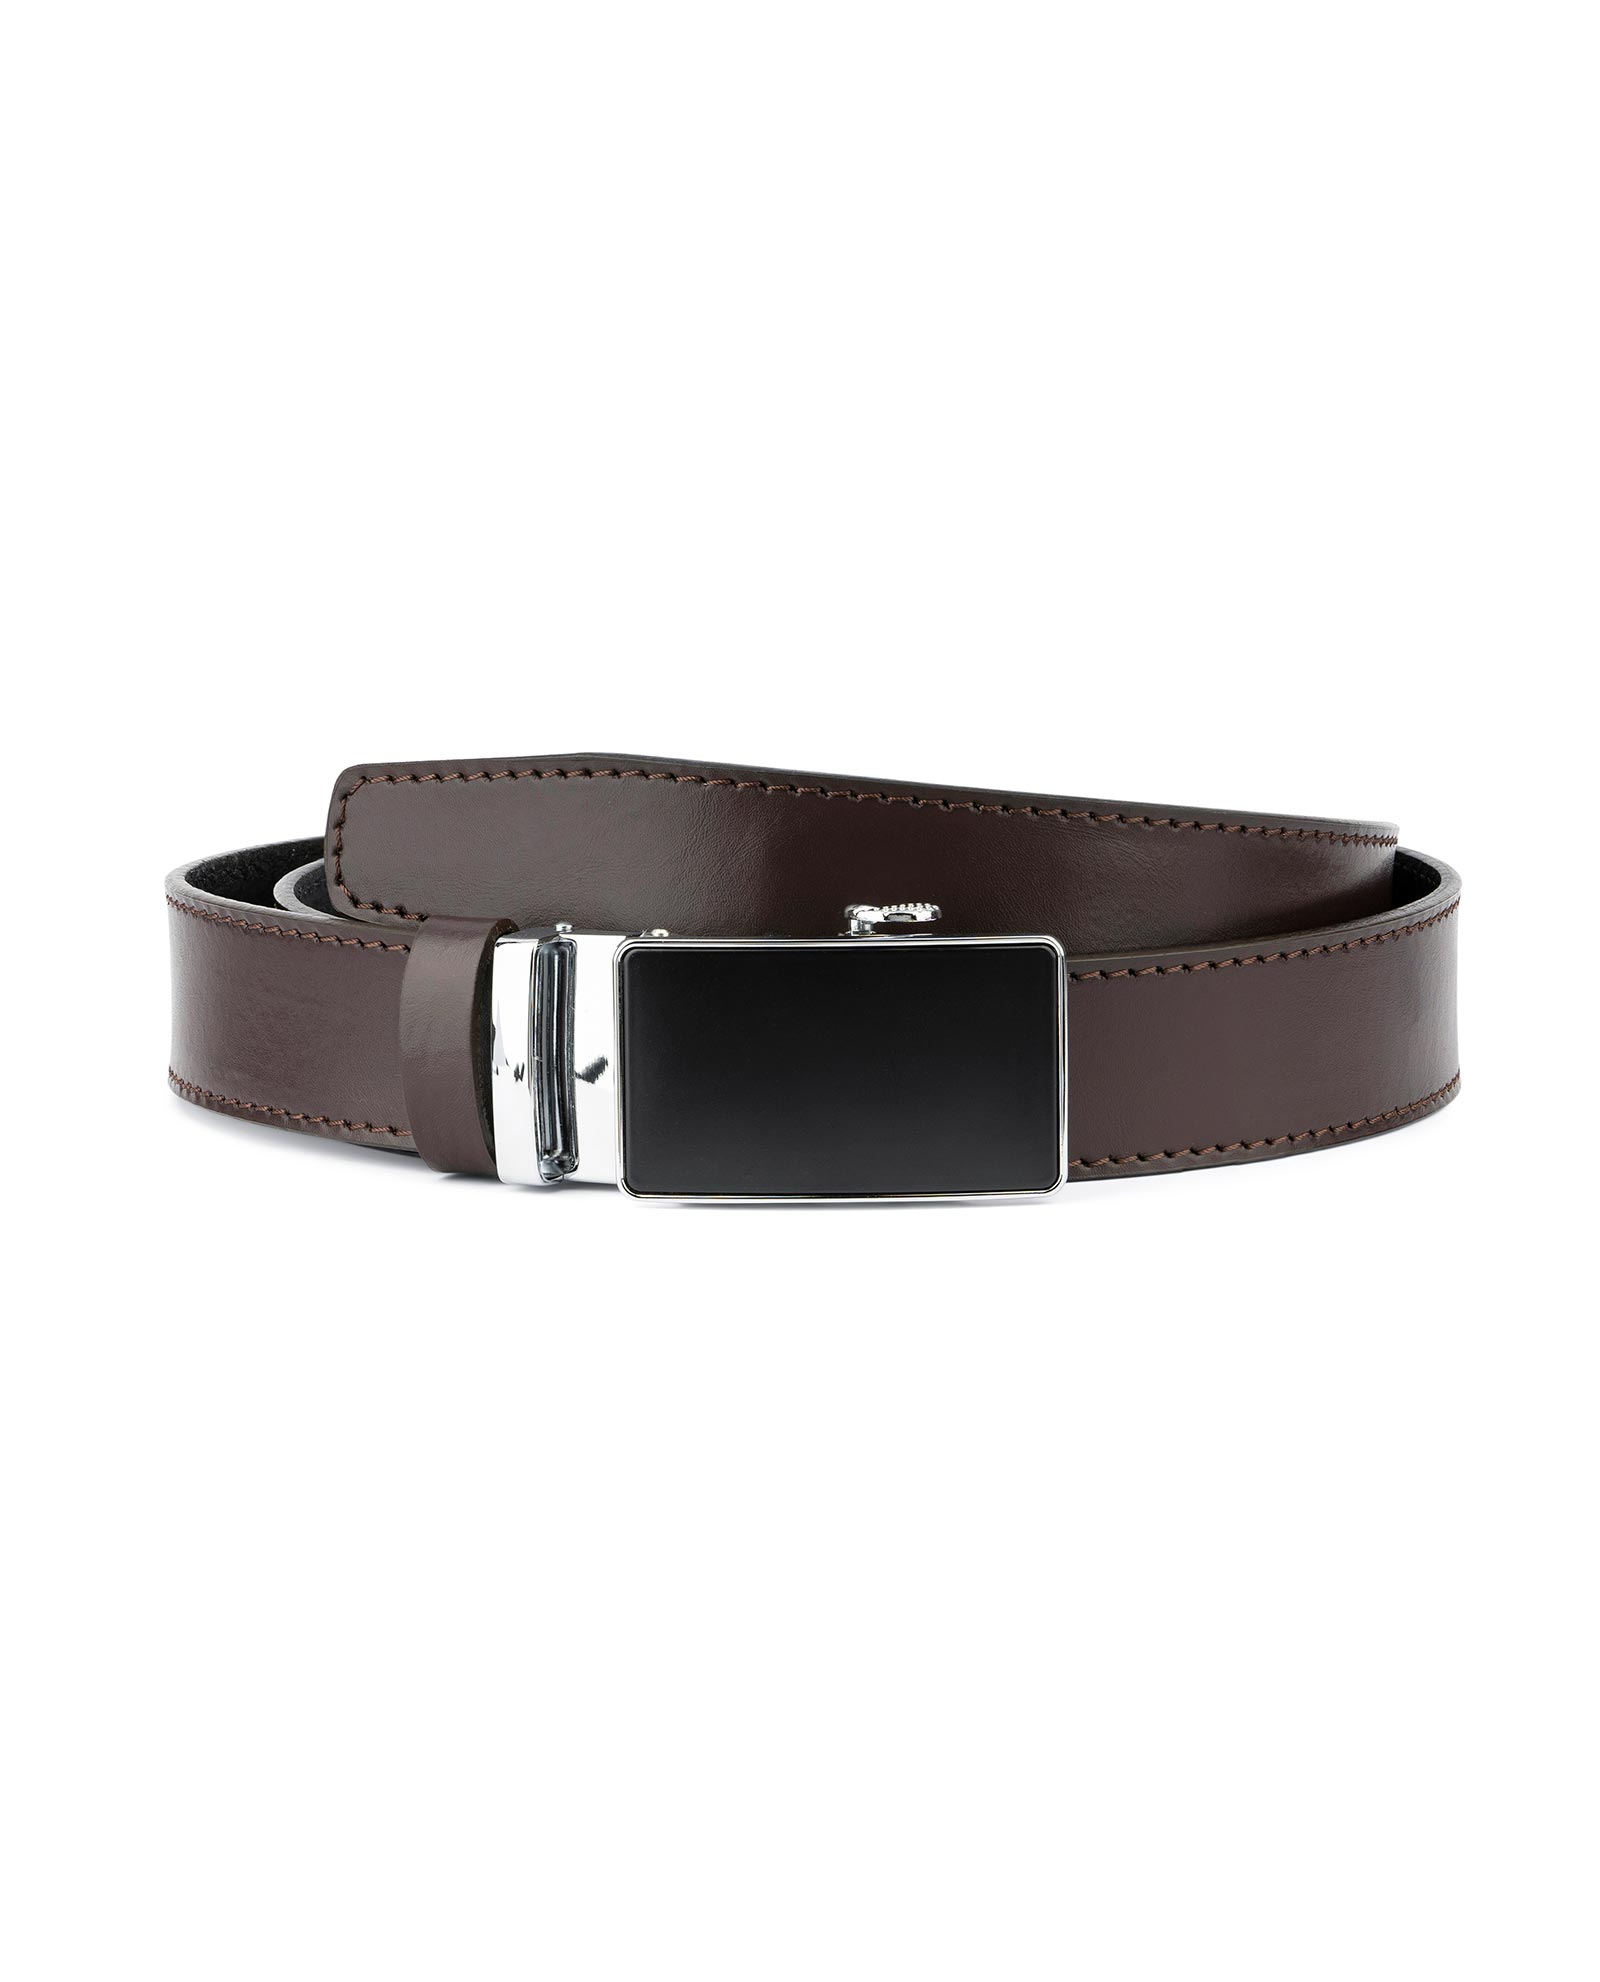 Buy Dark Brown Men's Belt | Automatic Buckle | LeatherBeltsOnline.com